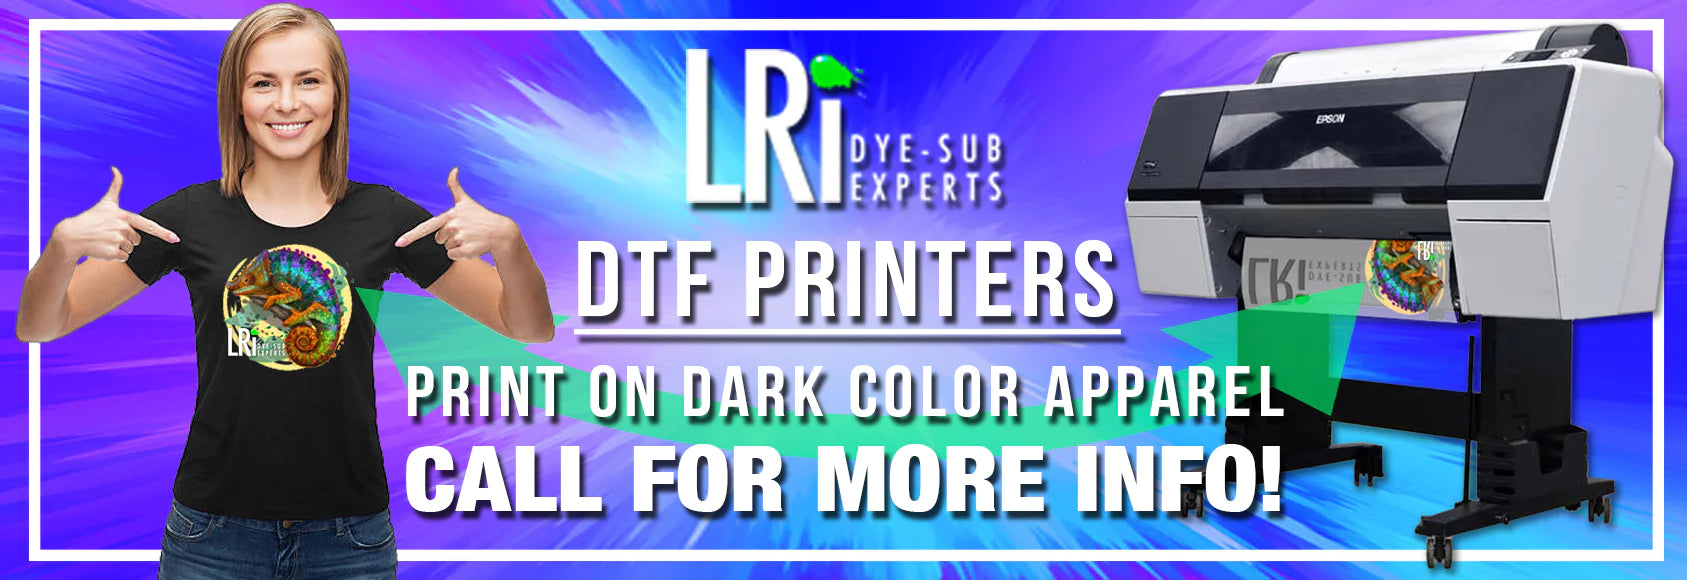 Epson 7890 DTF printer Package from LRI - Print Full Color Halftones on Dark Garments